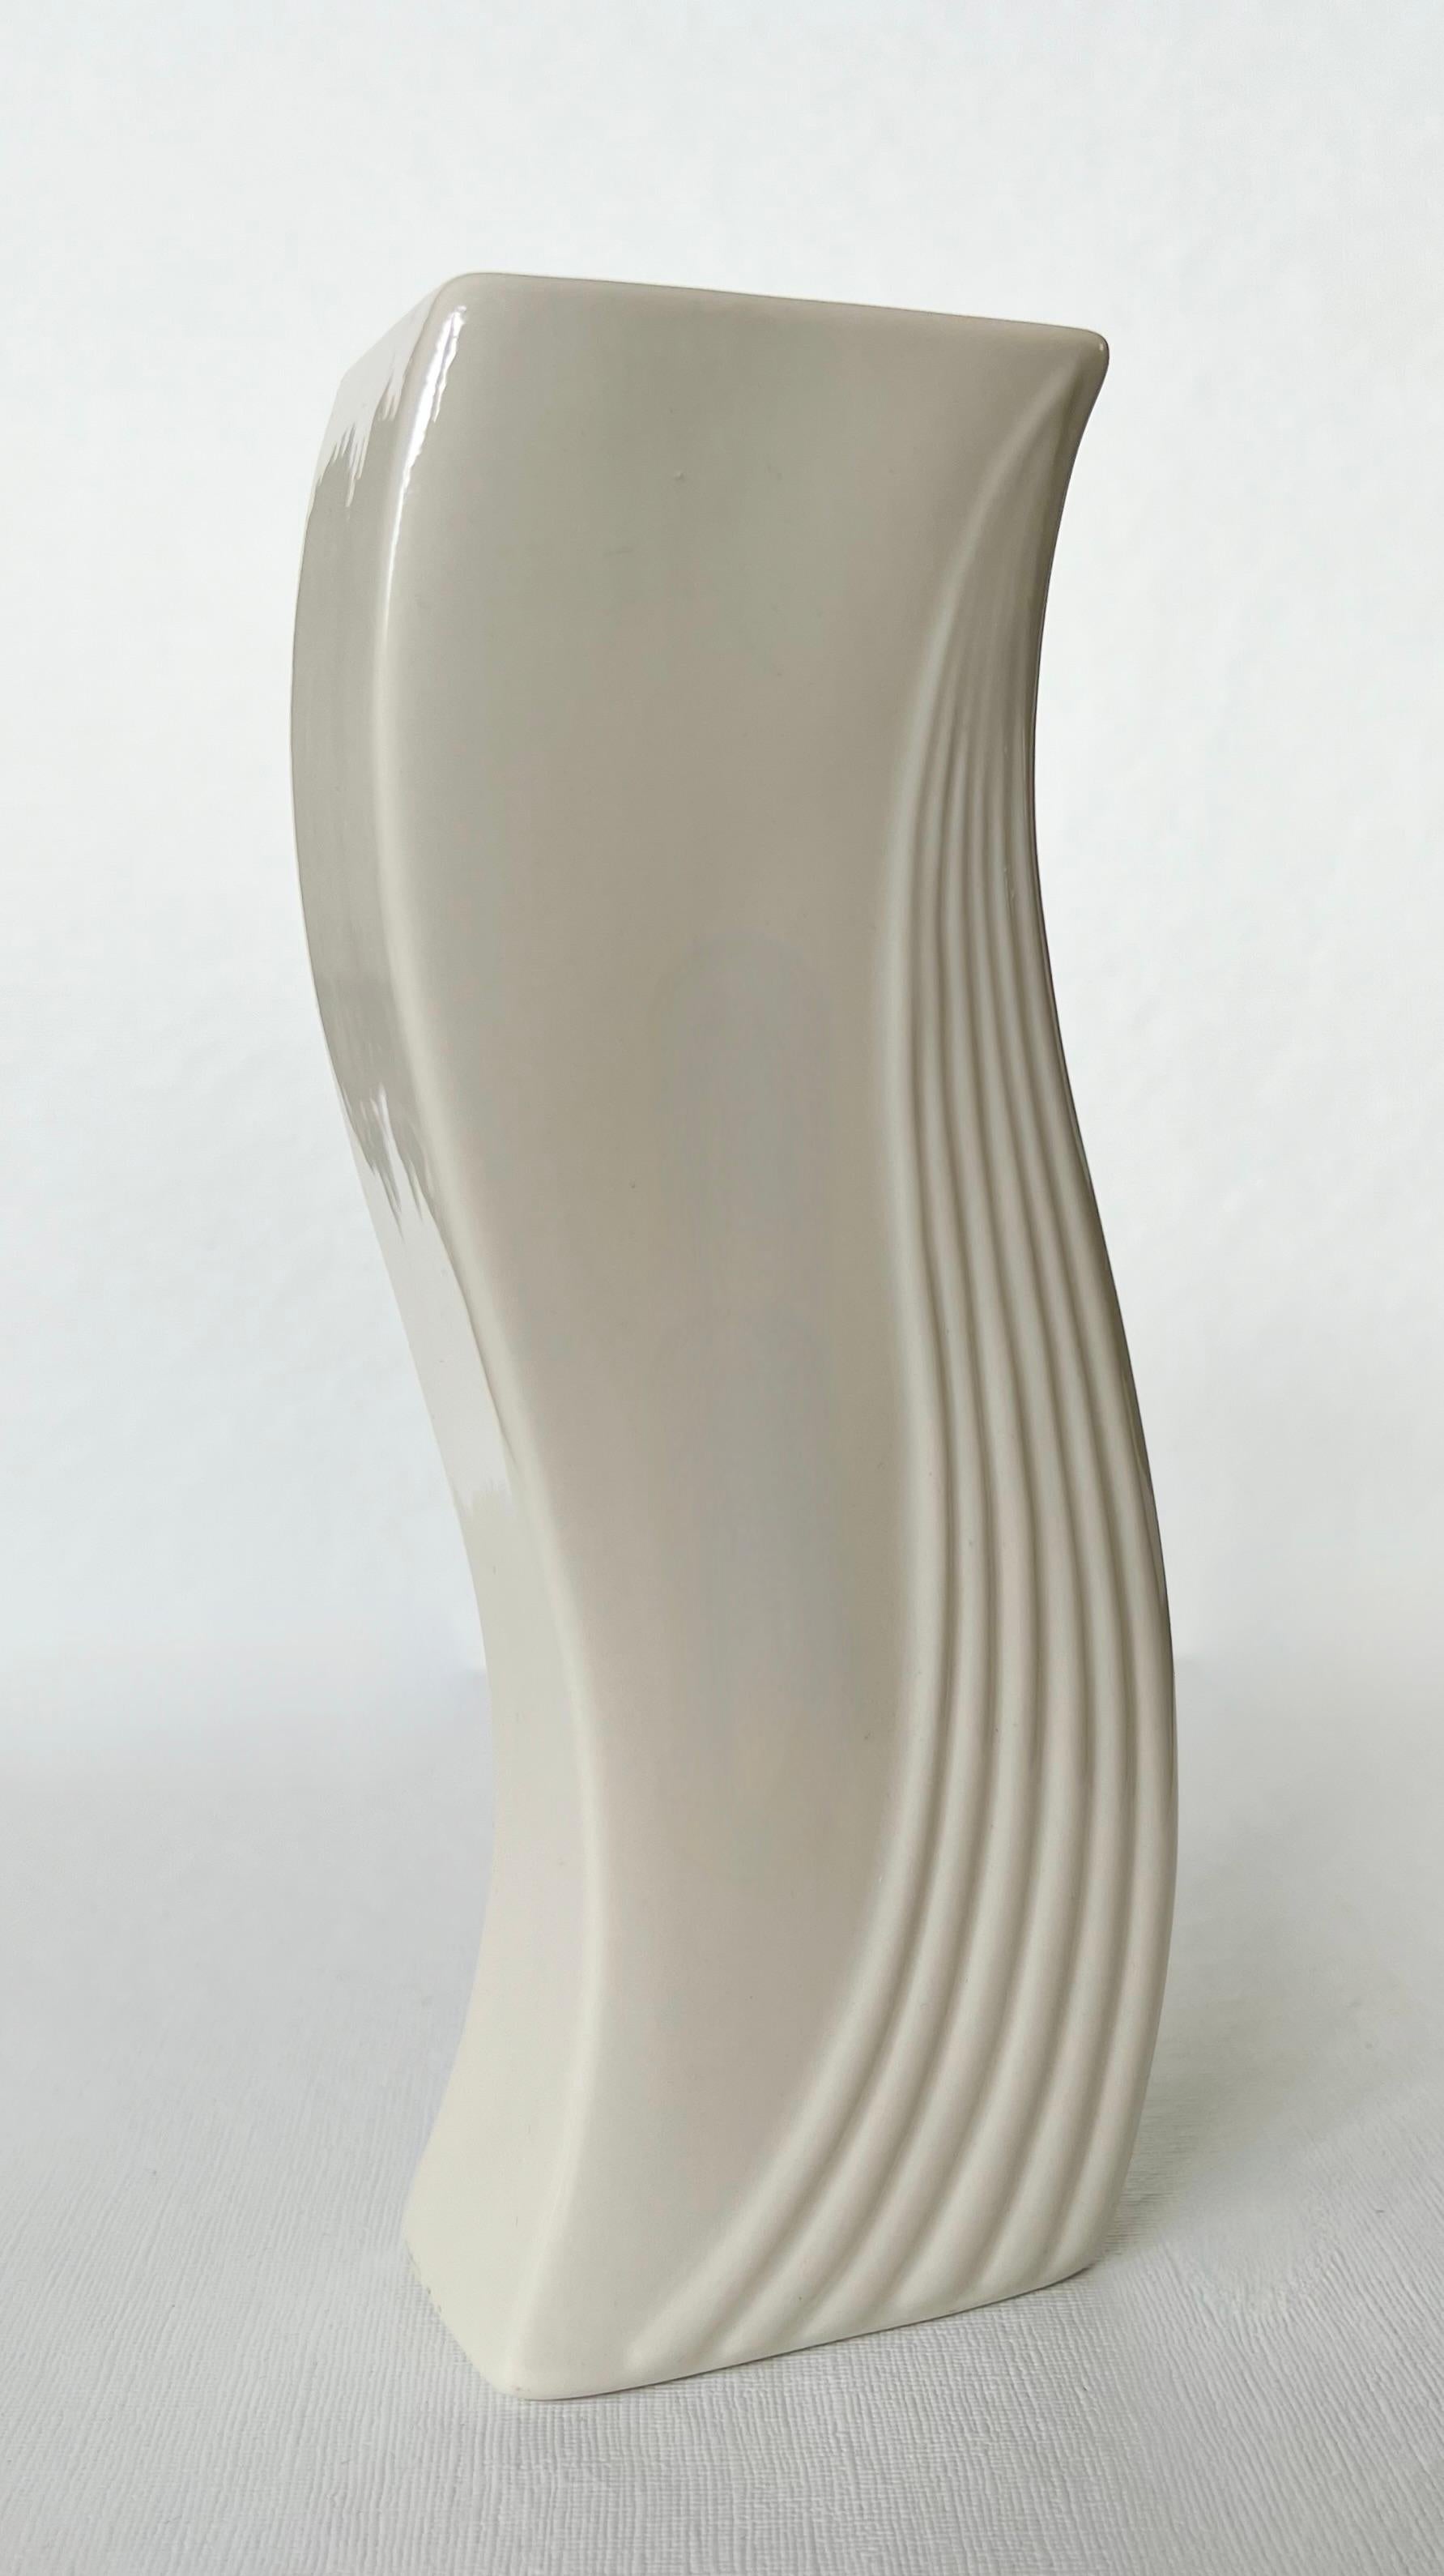 Art Deco Porcelain Cream Candlestick Candleholder by Beleek Pottery Ireland For Sale 1